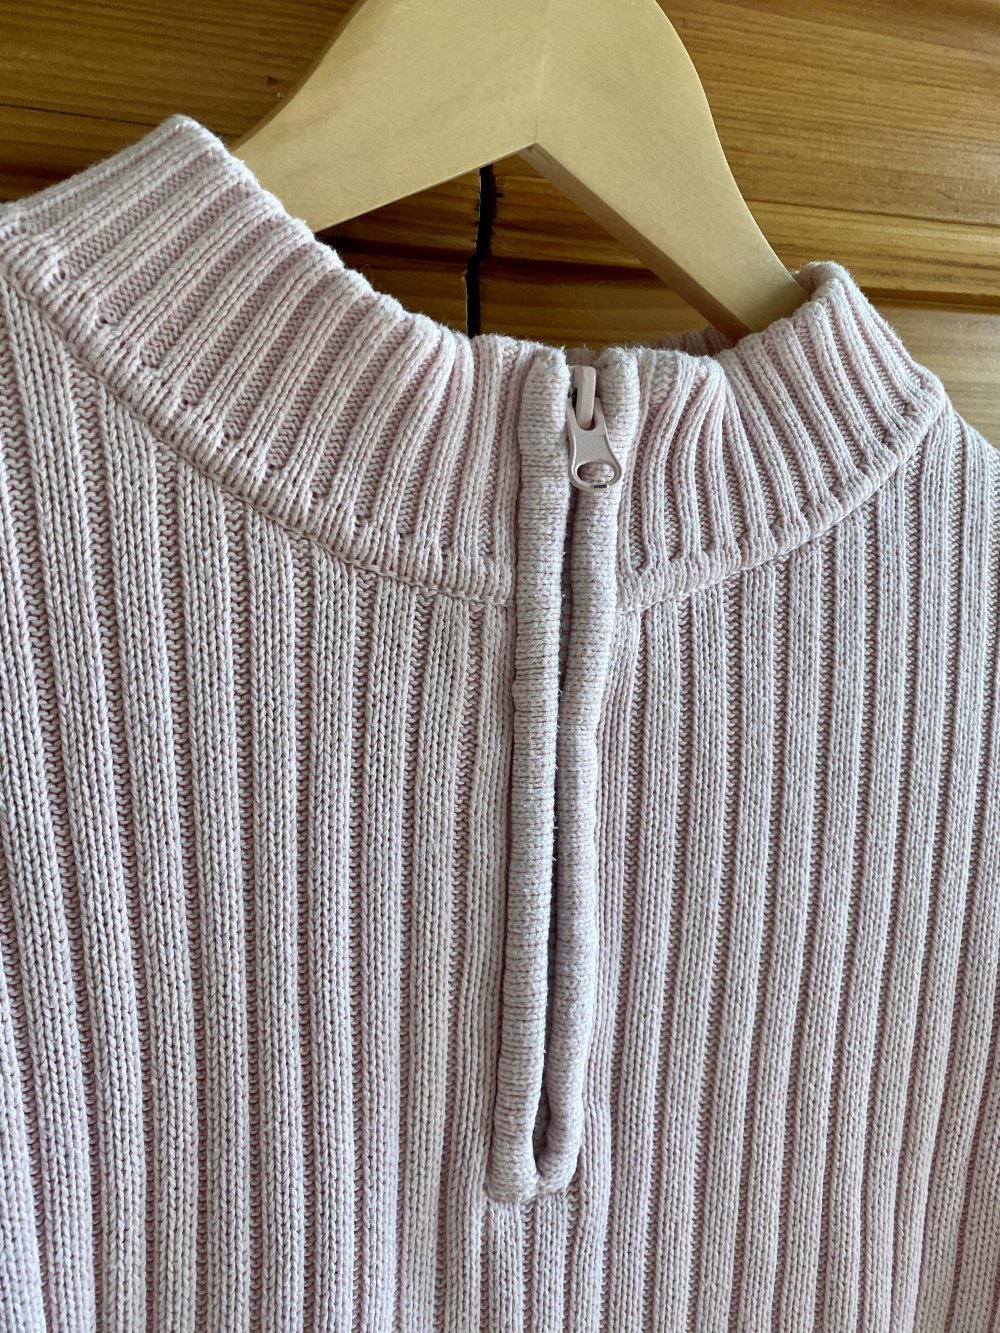 Vintage Sweater 90s